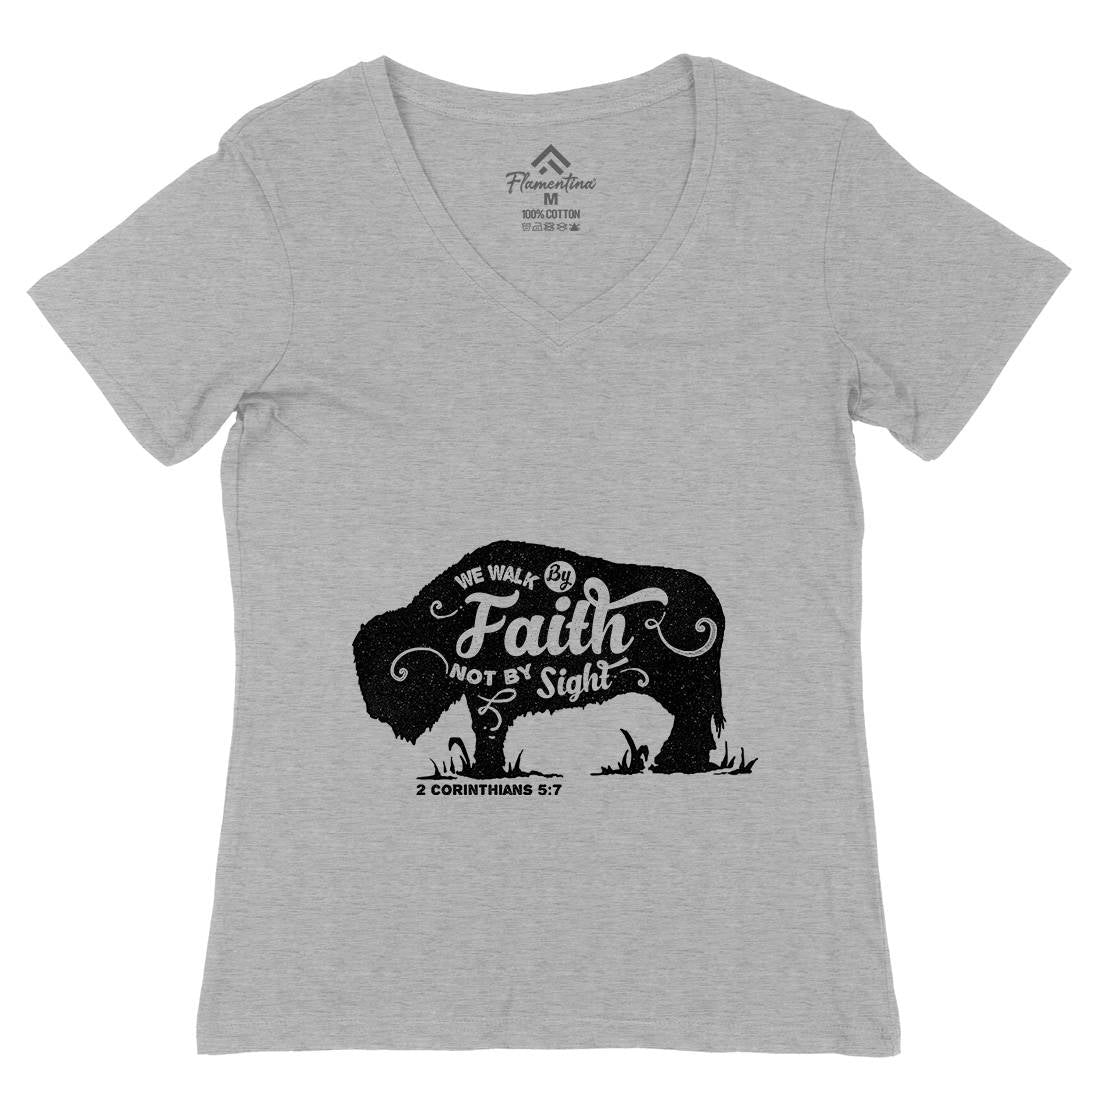 We Walk By Faith Womens Organic V-Neck T-Shirt Religion A392